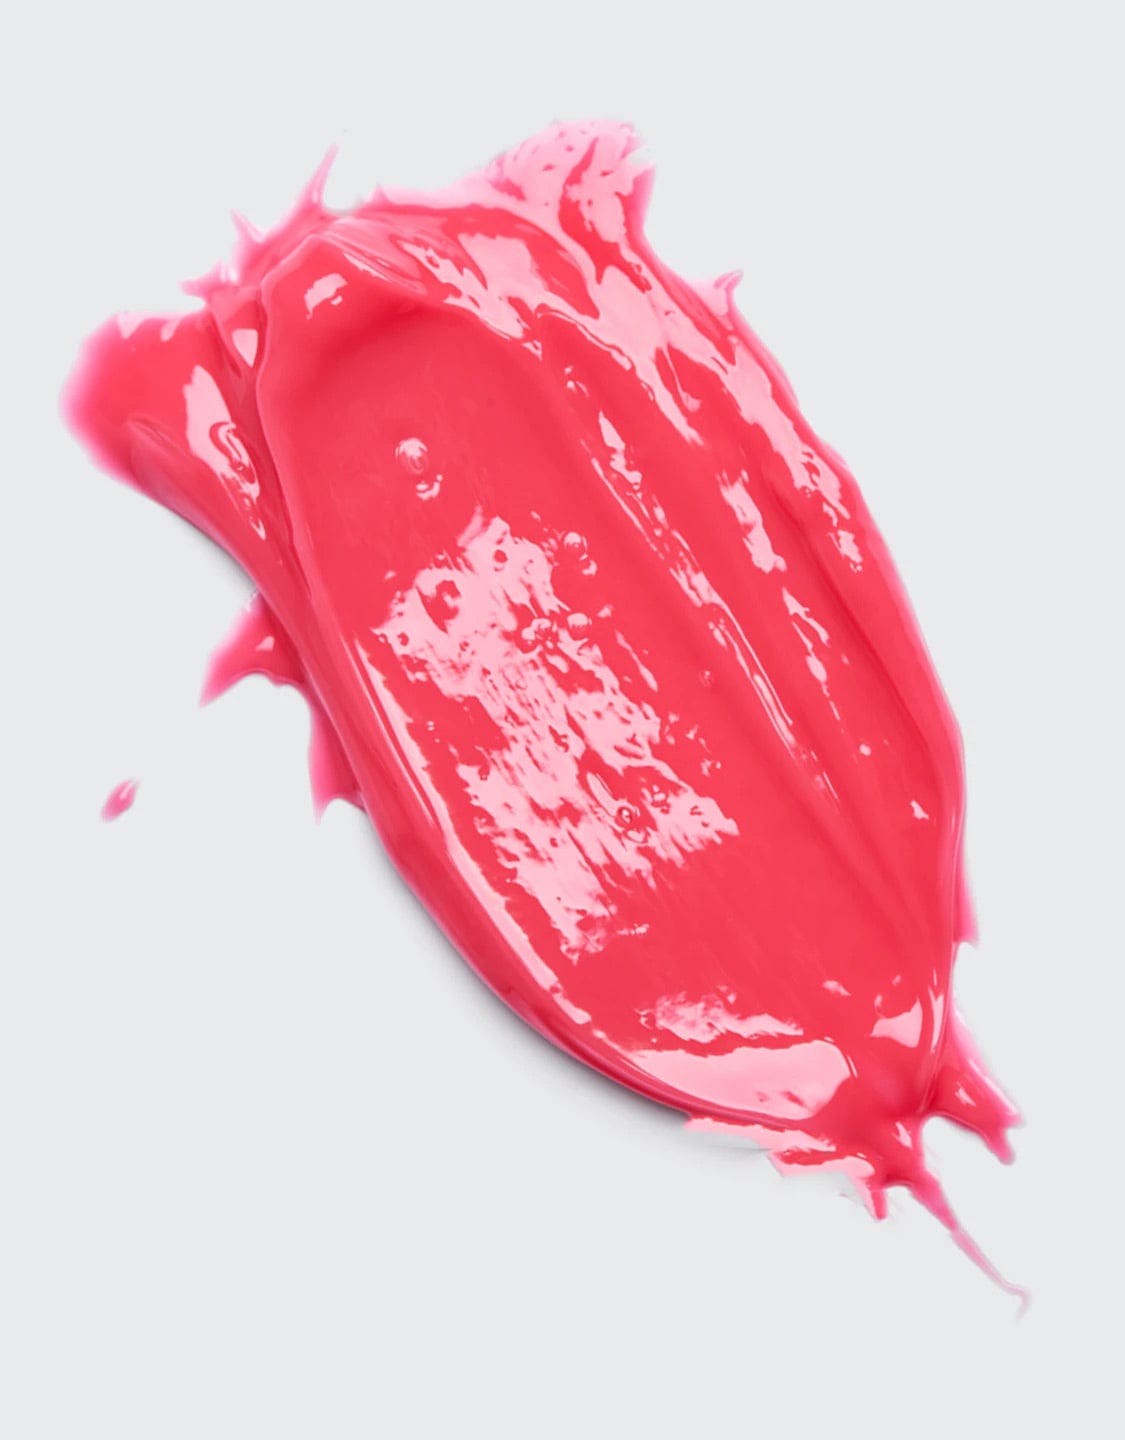 FACILE Lip Gloss Lip Jelly Tint - Rose sunja link - canada